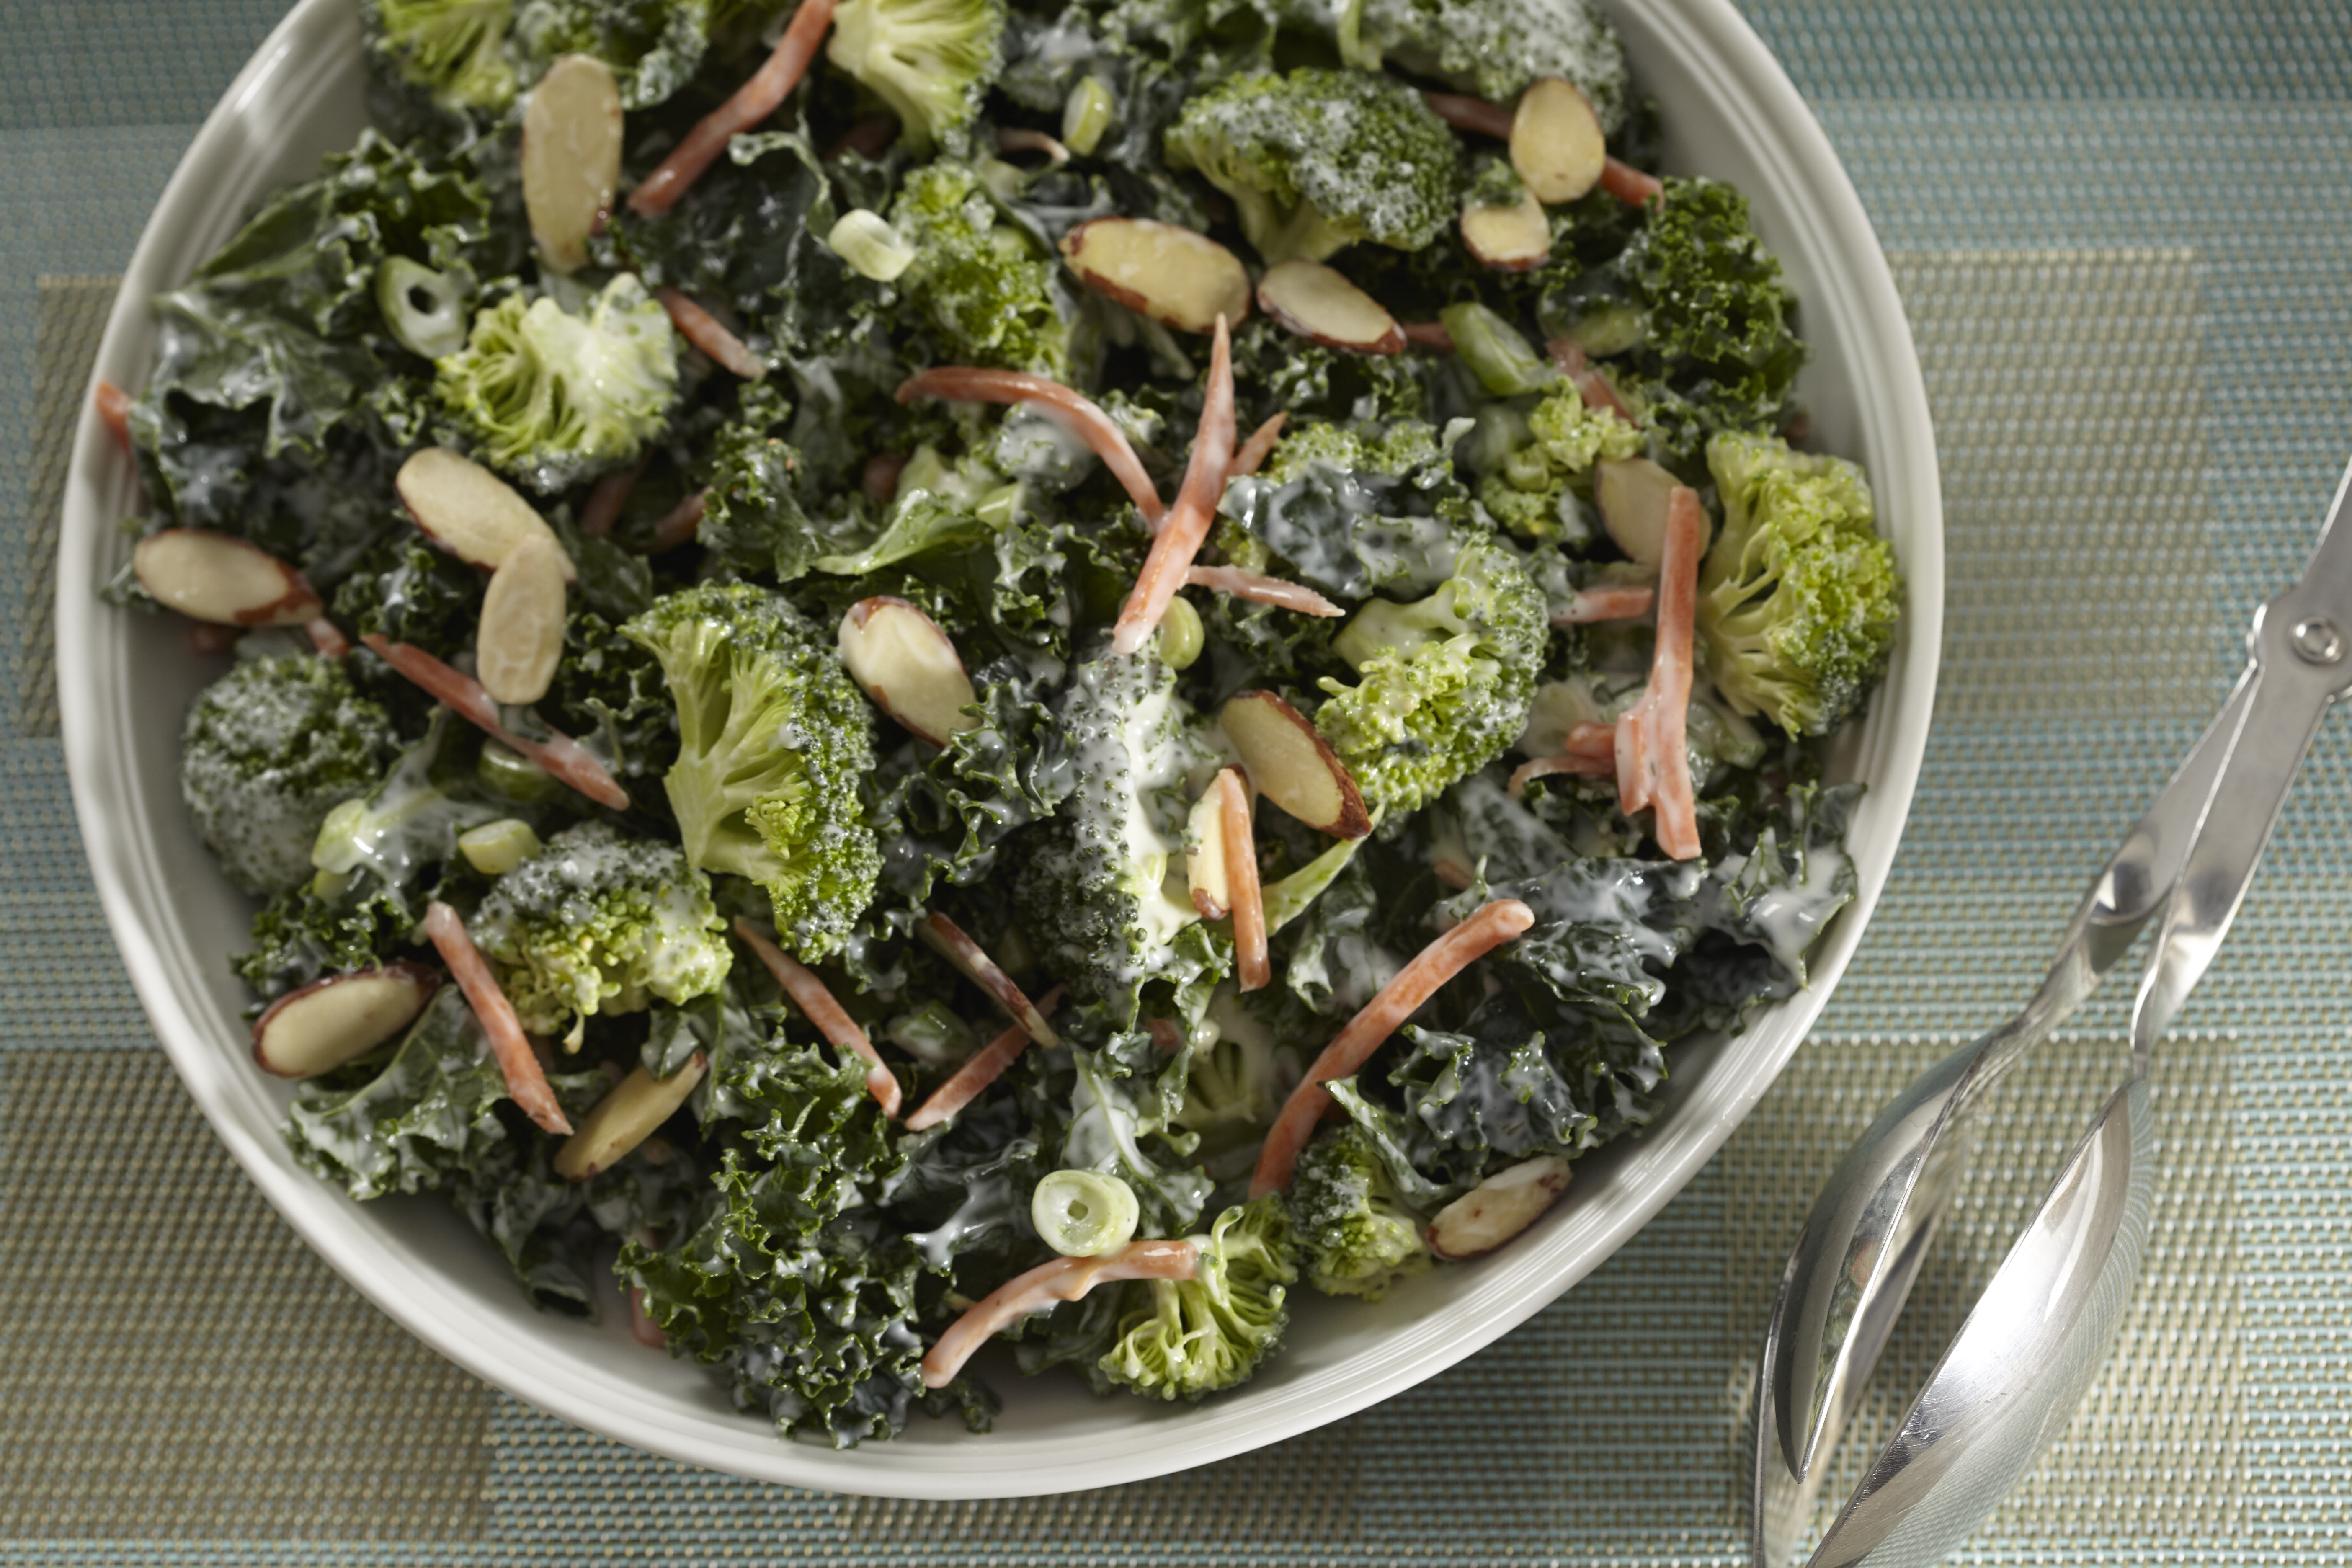 Creamy Kale and Broccoli Salad